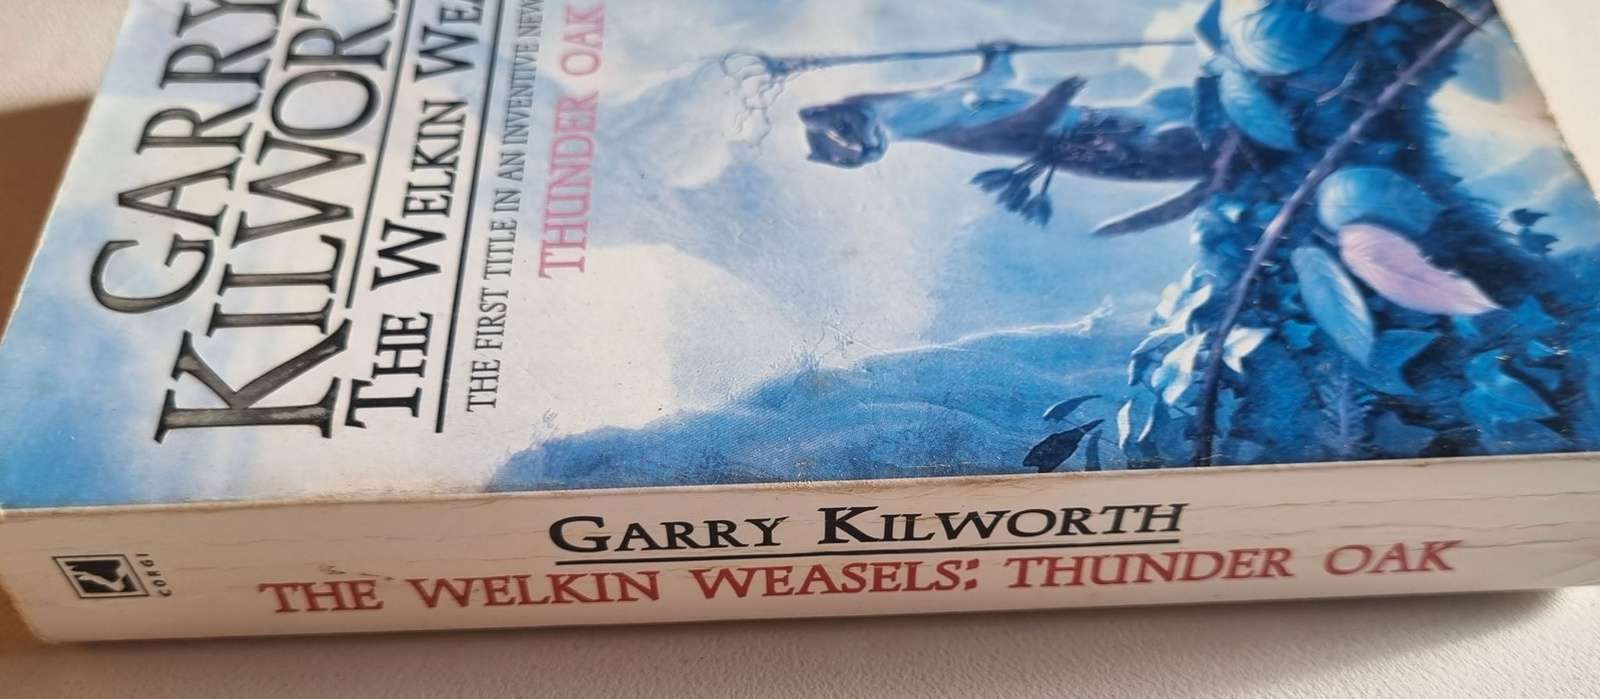 The Welkin Weasels - Thunderoak - Garry Kilworth